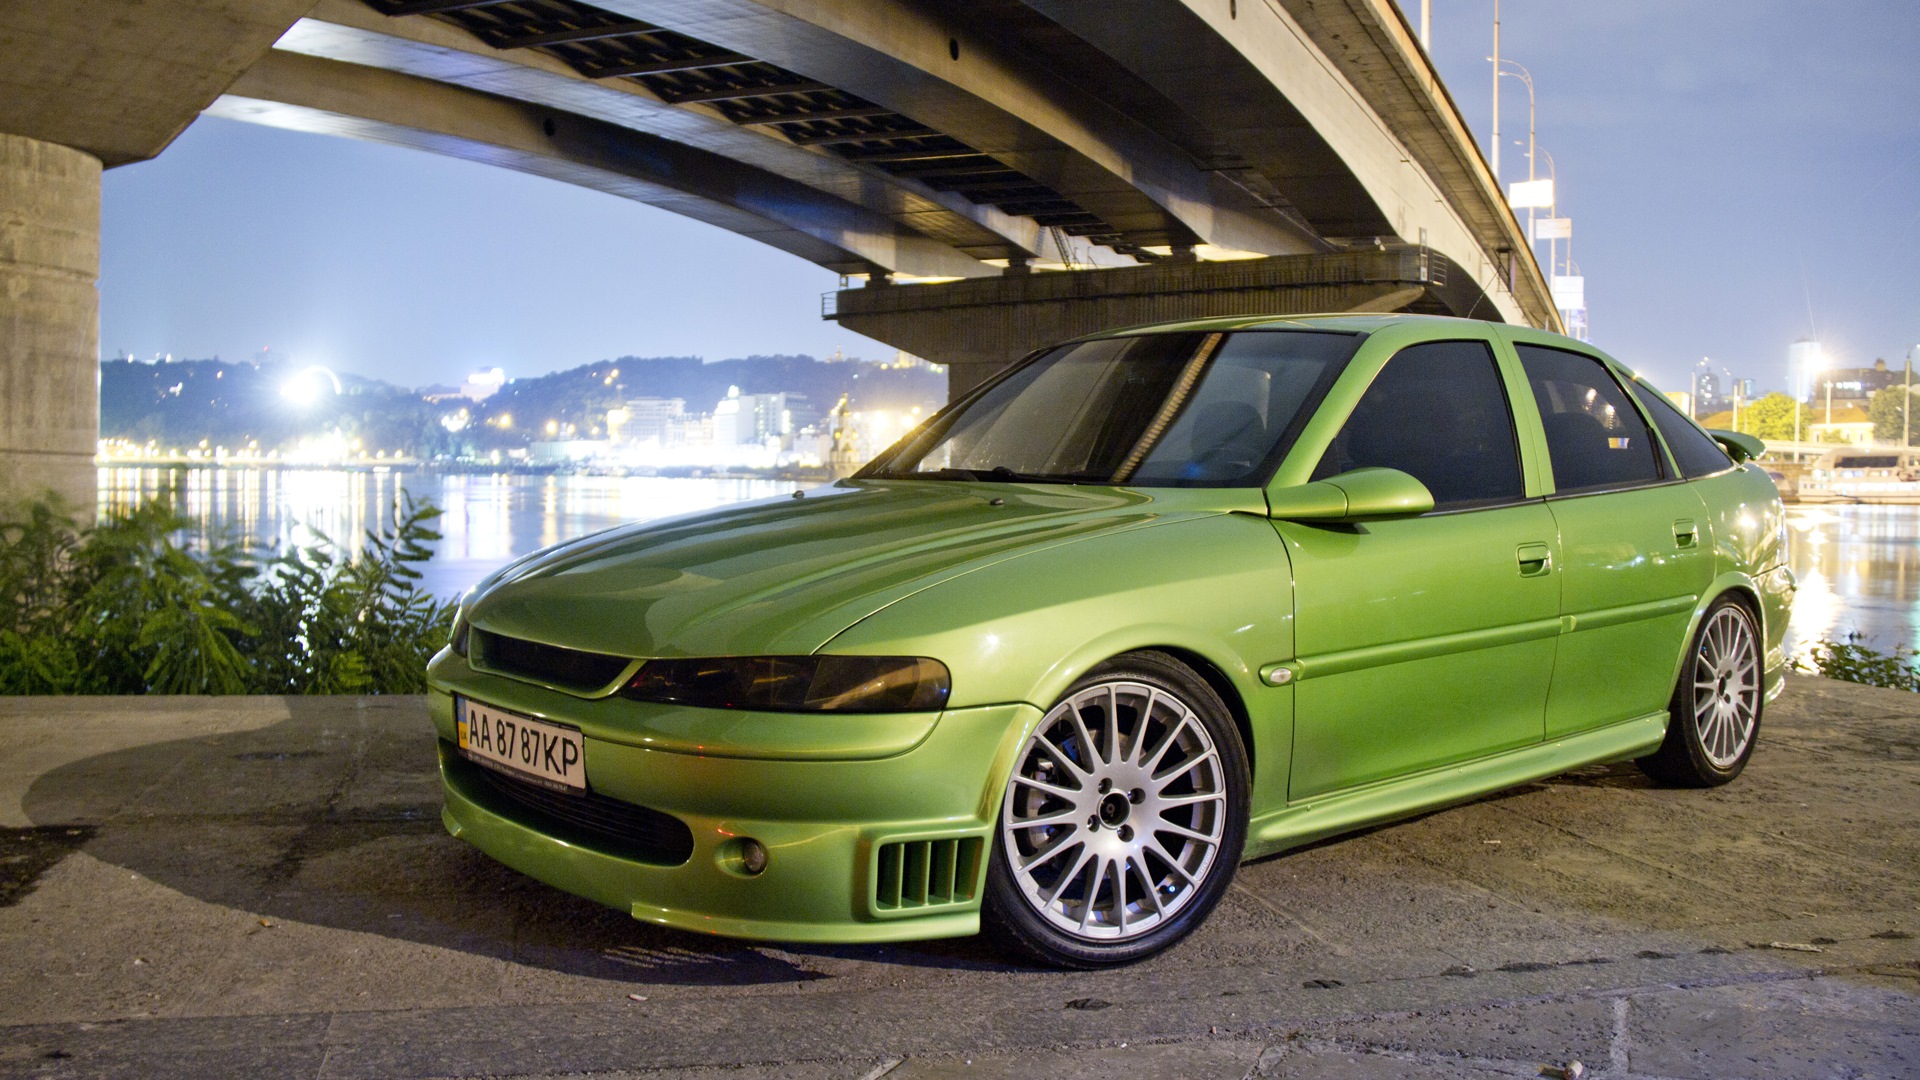 Opel Vectra 1998 Tuning. Opel Vectra b 2000 зеленый. Opel Vectra b95. Opel Vectra b Tuning. Покажи опель вектра б